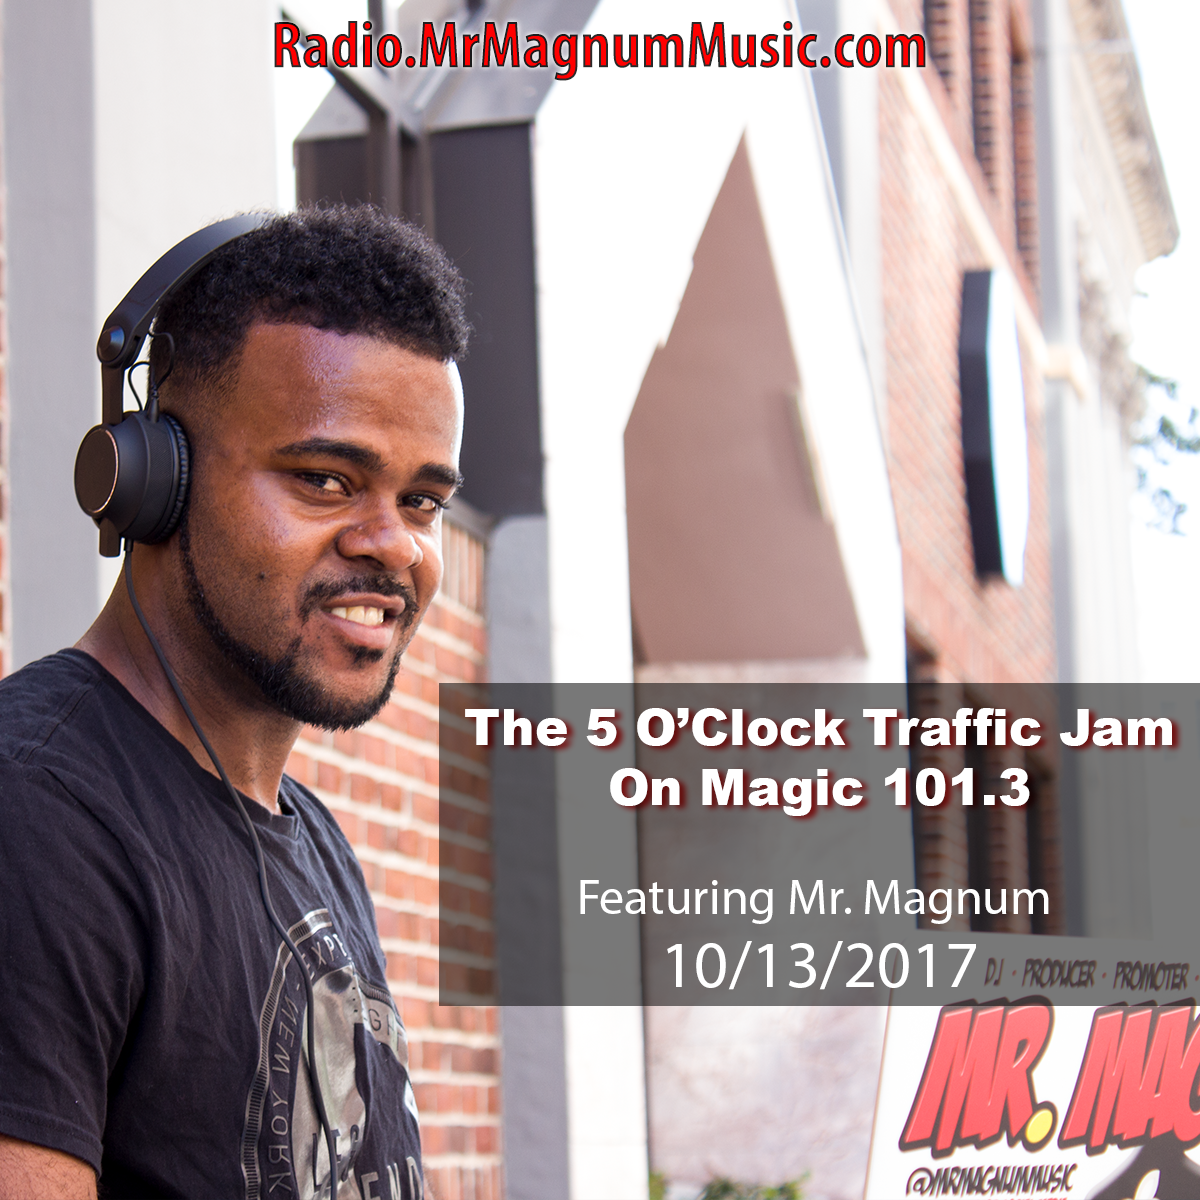 The 5 O'Clock Traffic Jam 20171023 featuring Gainesville's #1 DJ, Mr. Magnum on Magic 101.3